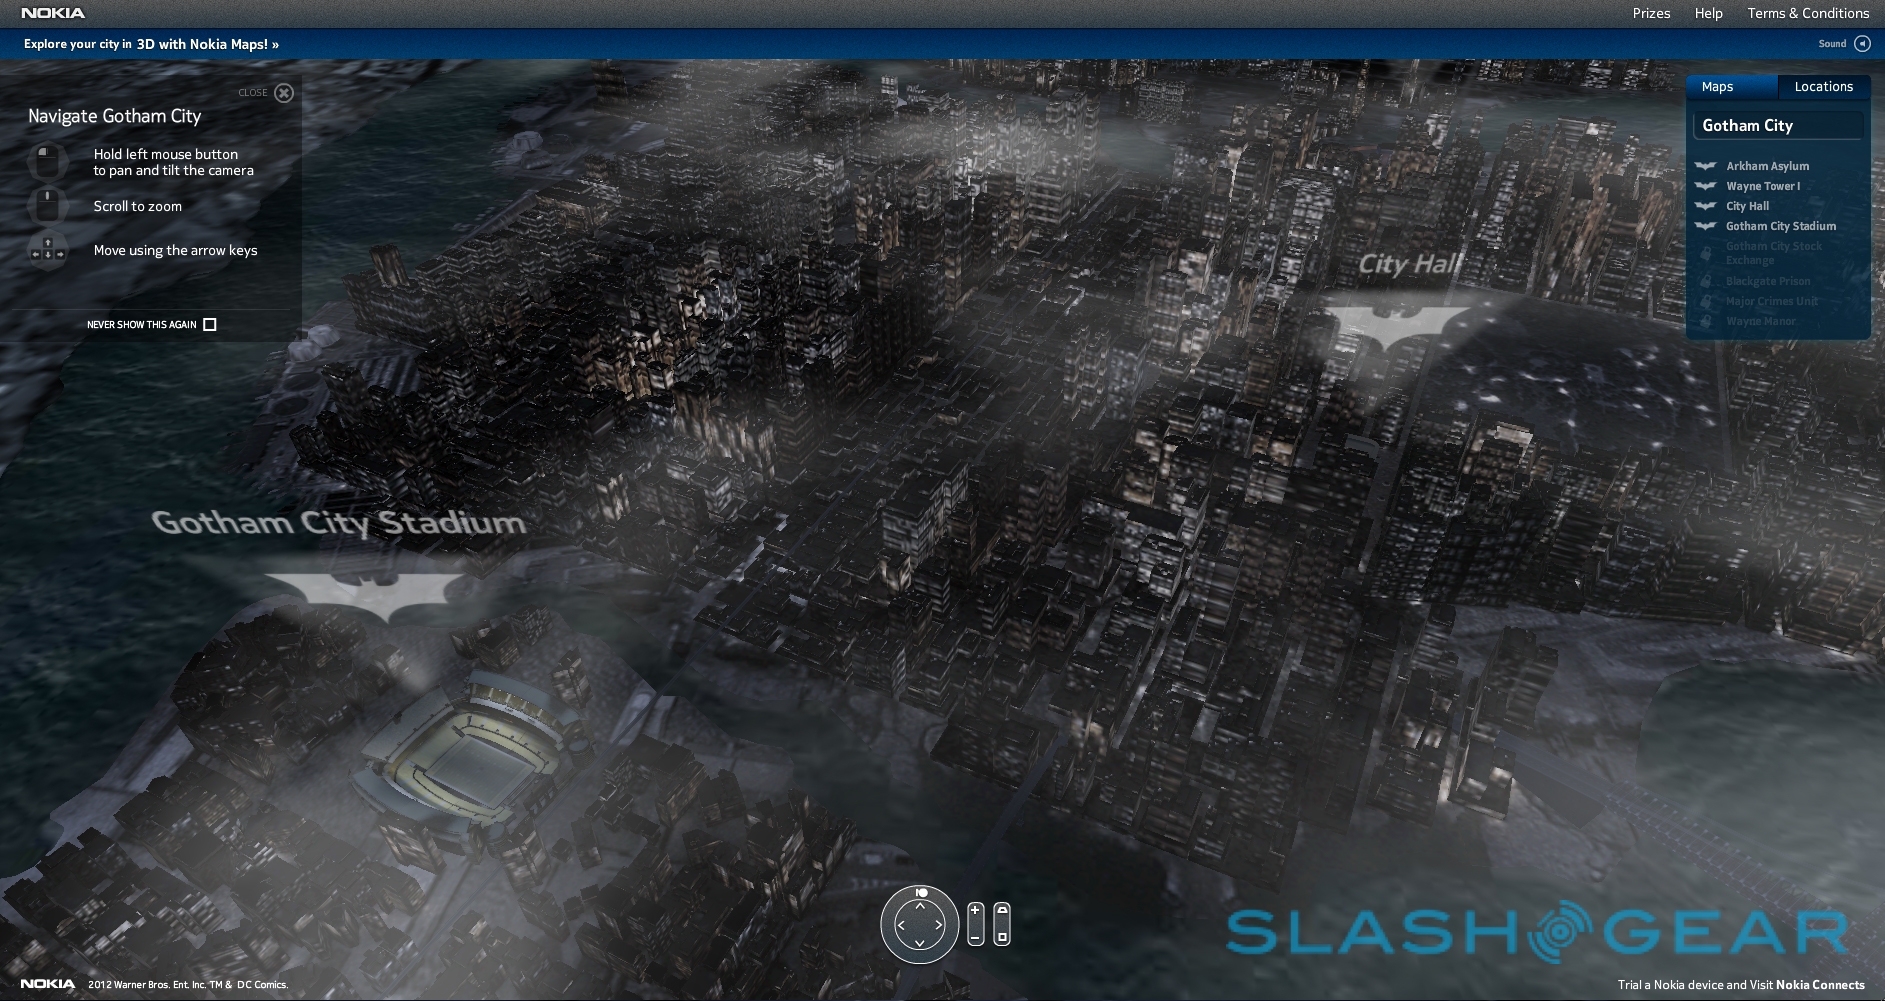 Nokia Maps 3d Gotham City In The Dark Knight Rises Tie In Updated Slashgear